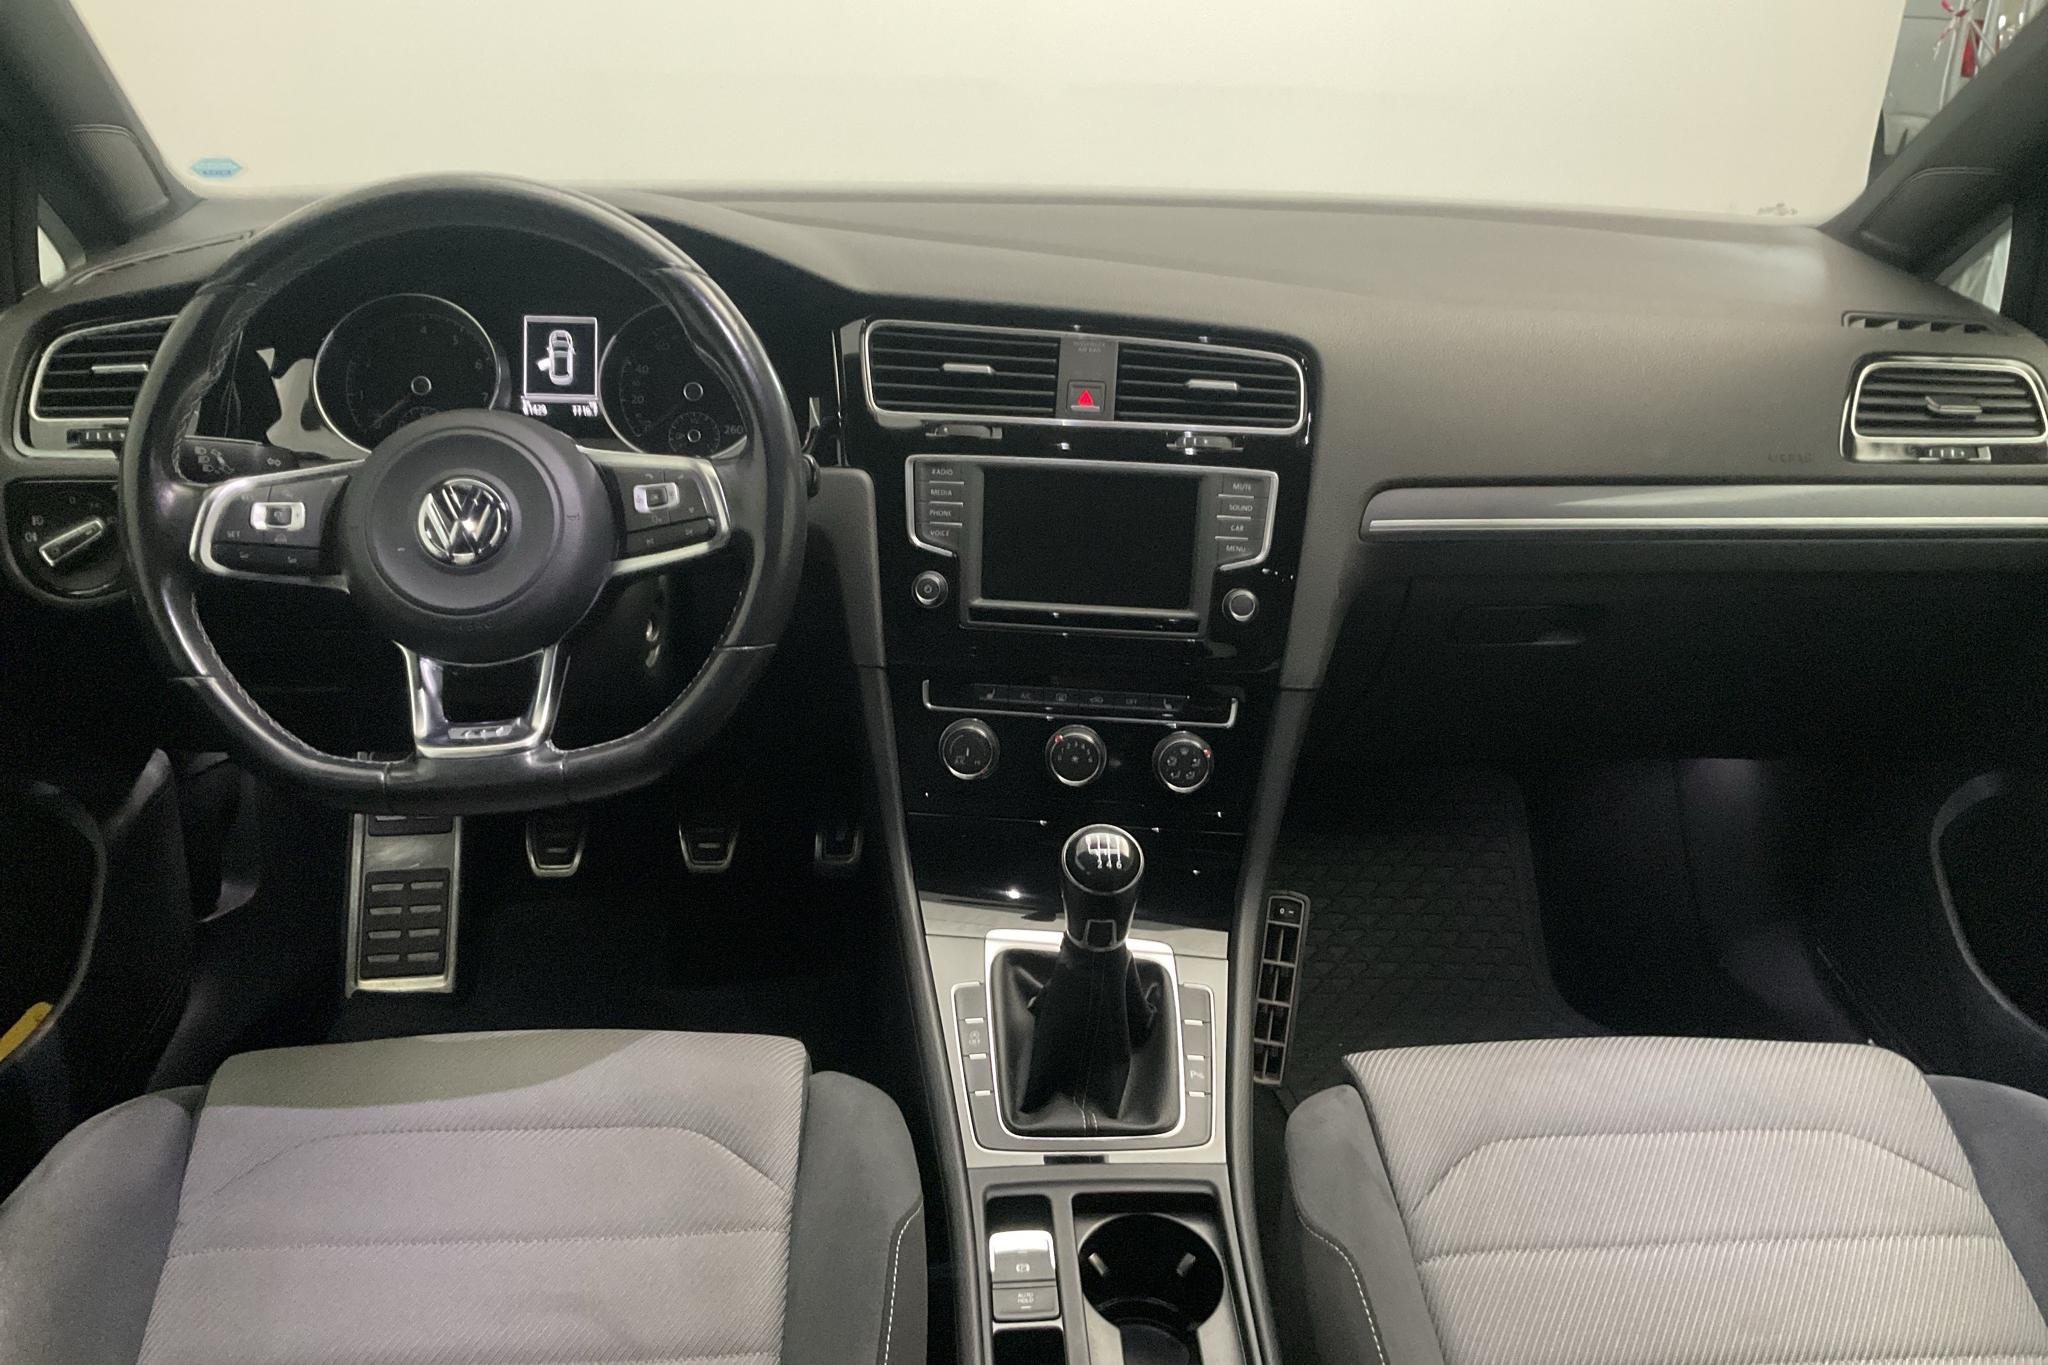 VW Golf VII 1.4 TSI 5dr (150hk) - 81 420 km - Manual - gray - 2017